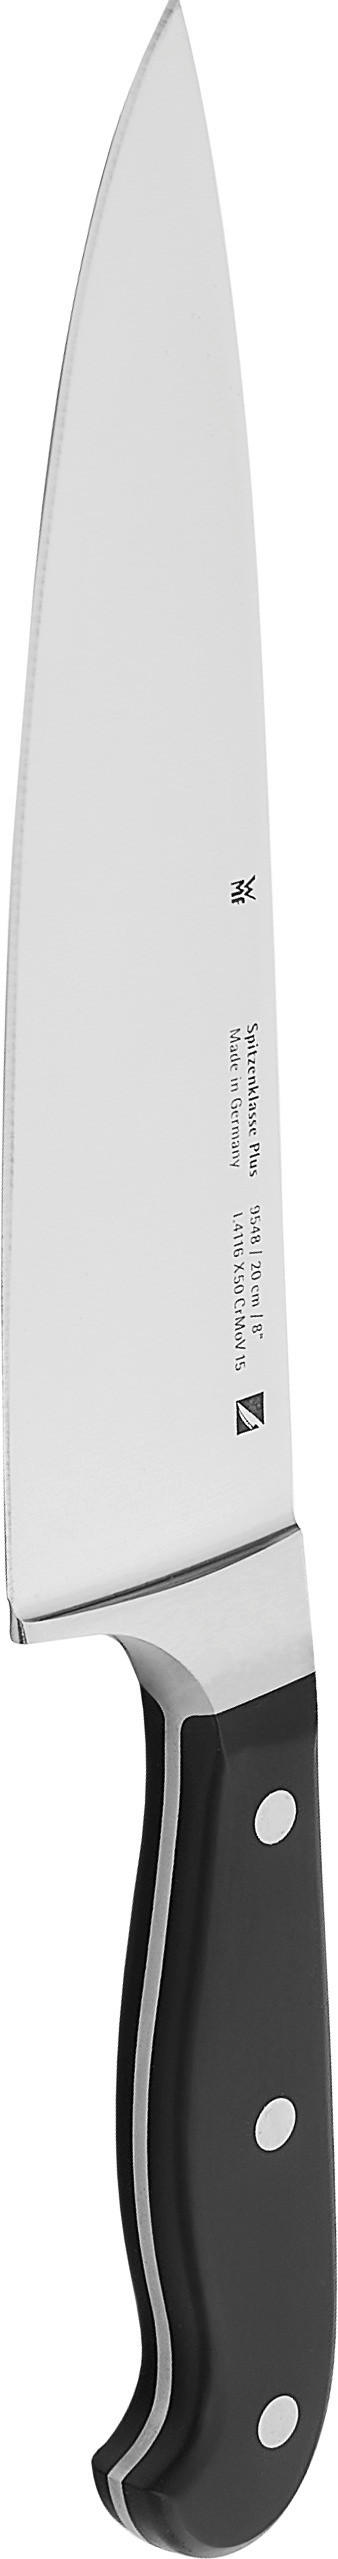 KOCHMESSER  Edelstahl  35 cm  - Edelstahlfarben/Schwarz, Basics, Kunststoff/Metall (35cm) - WMF